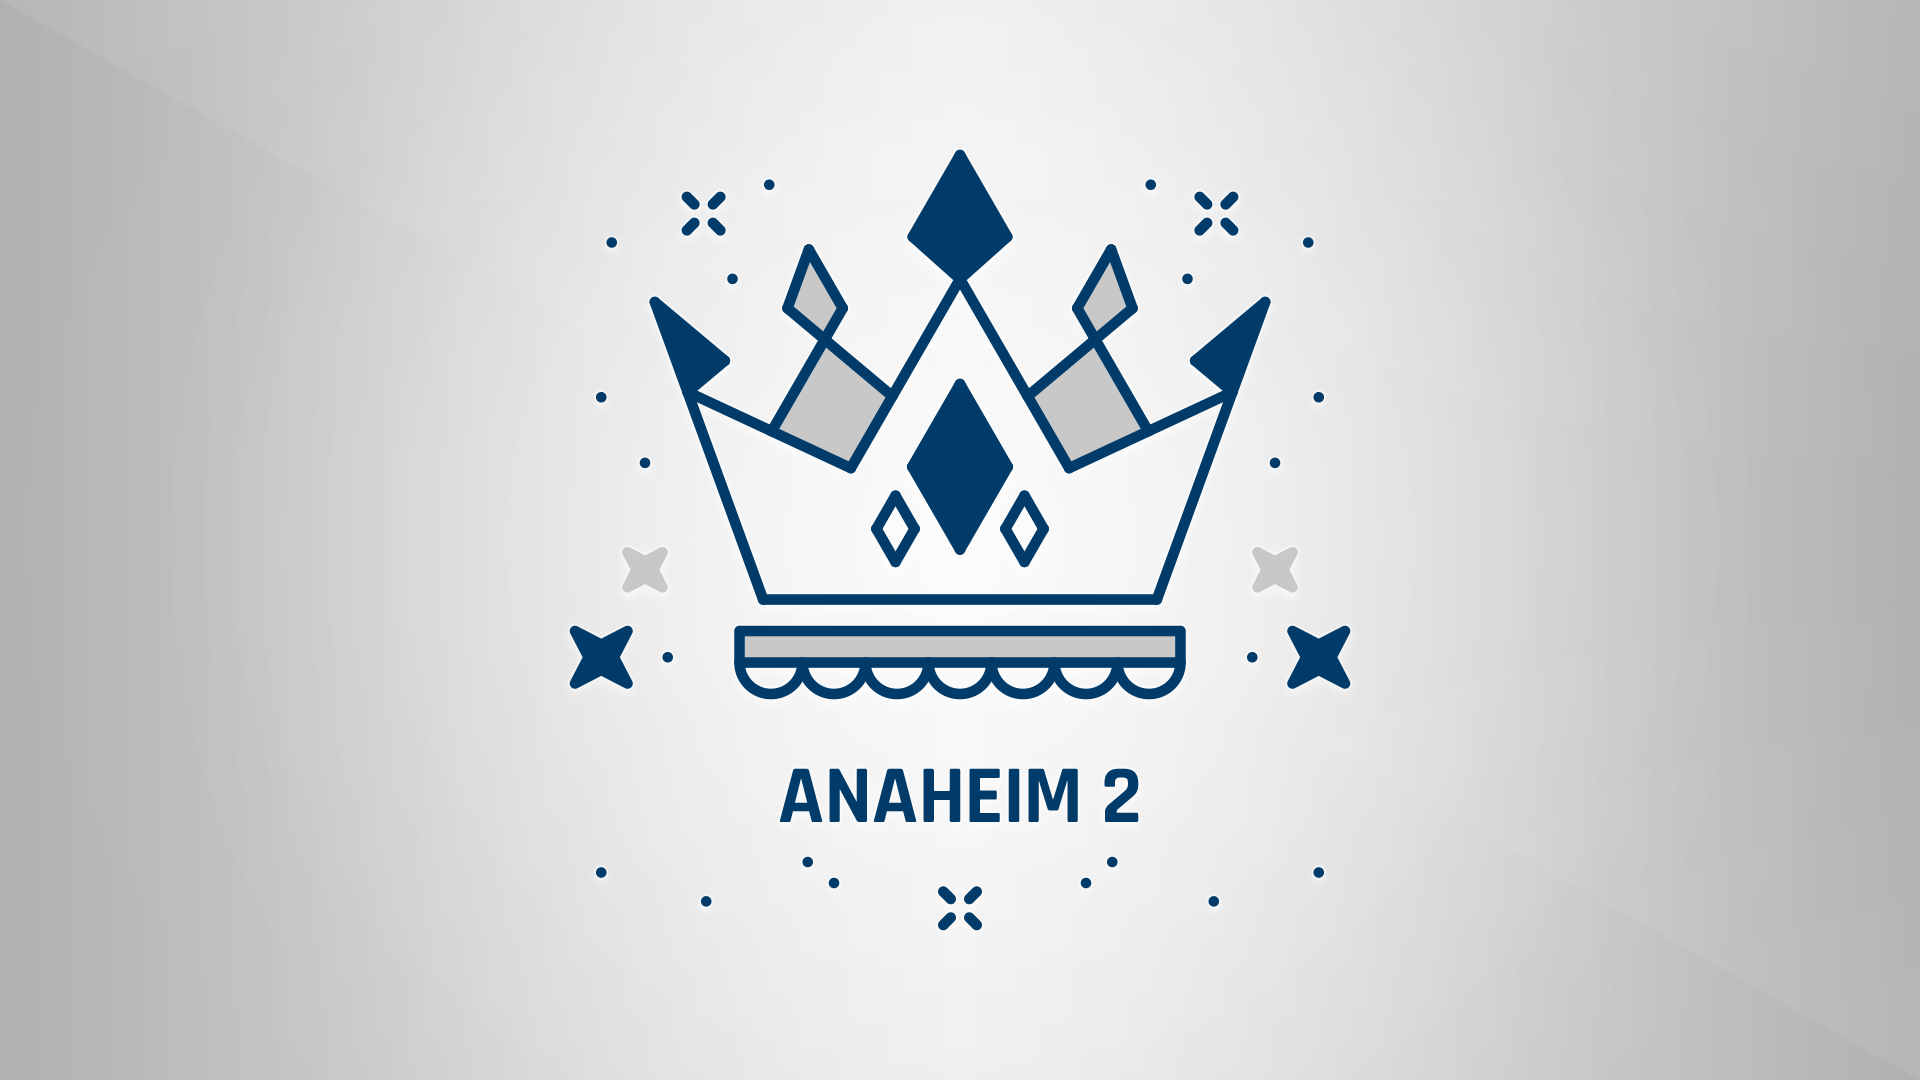 King of Anaheim 2